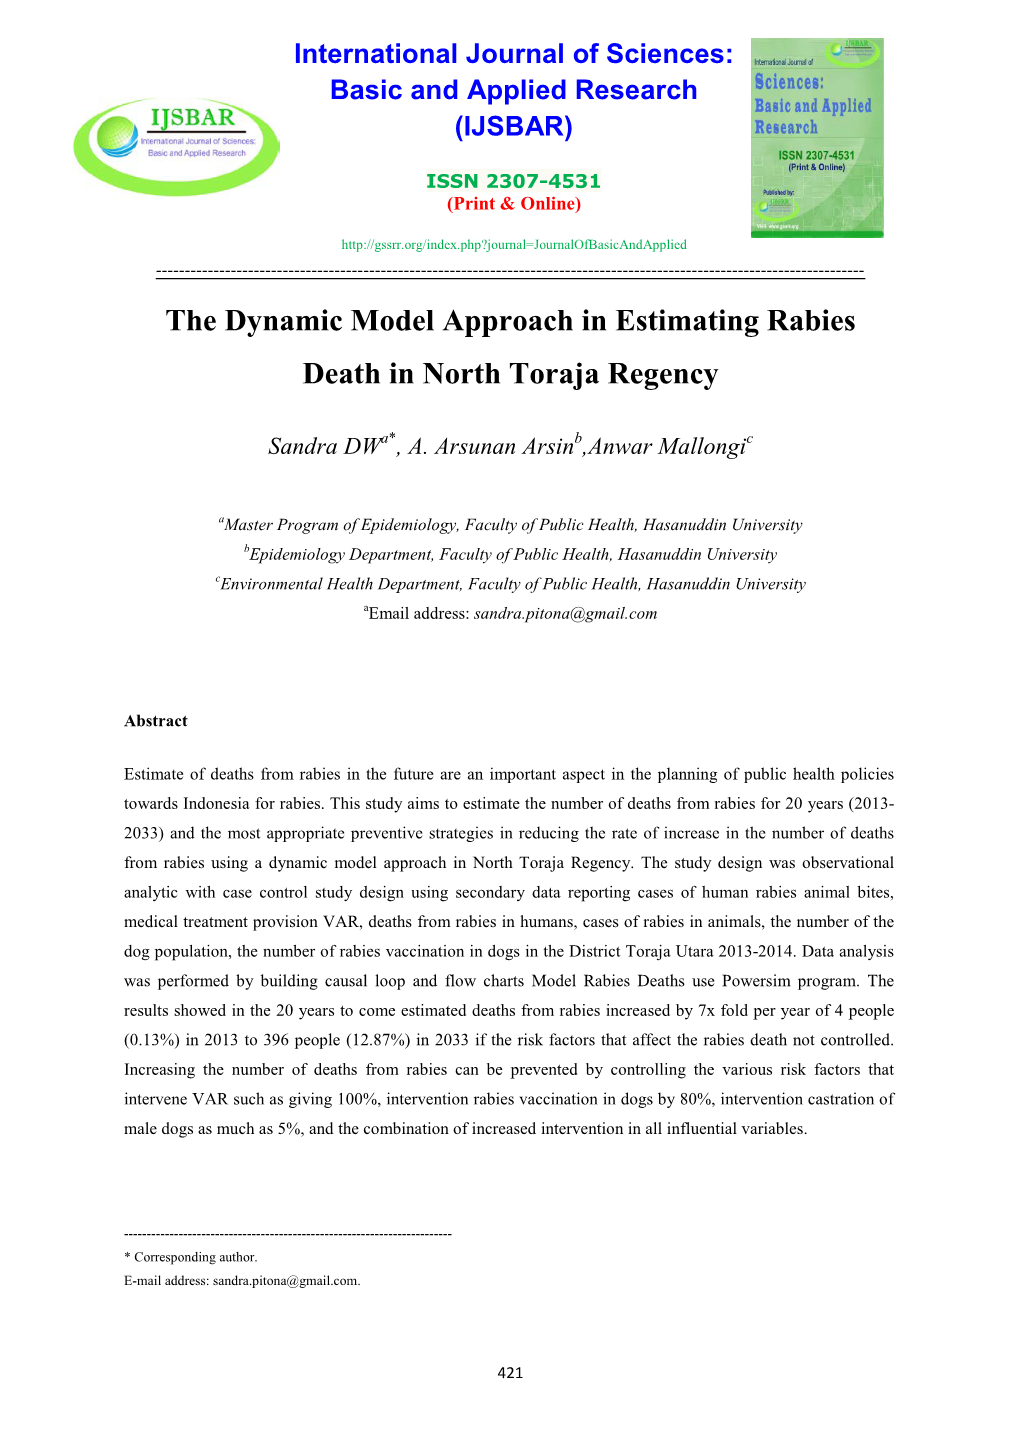 The Dynamic Model Approach in Estimating Rabies Death in North Toraja Regency